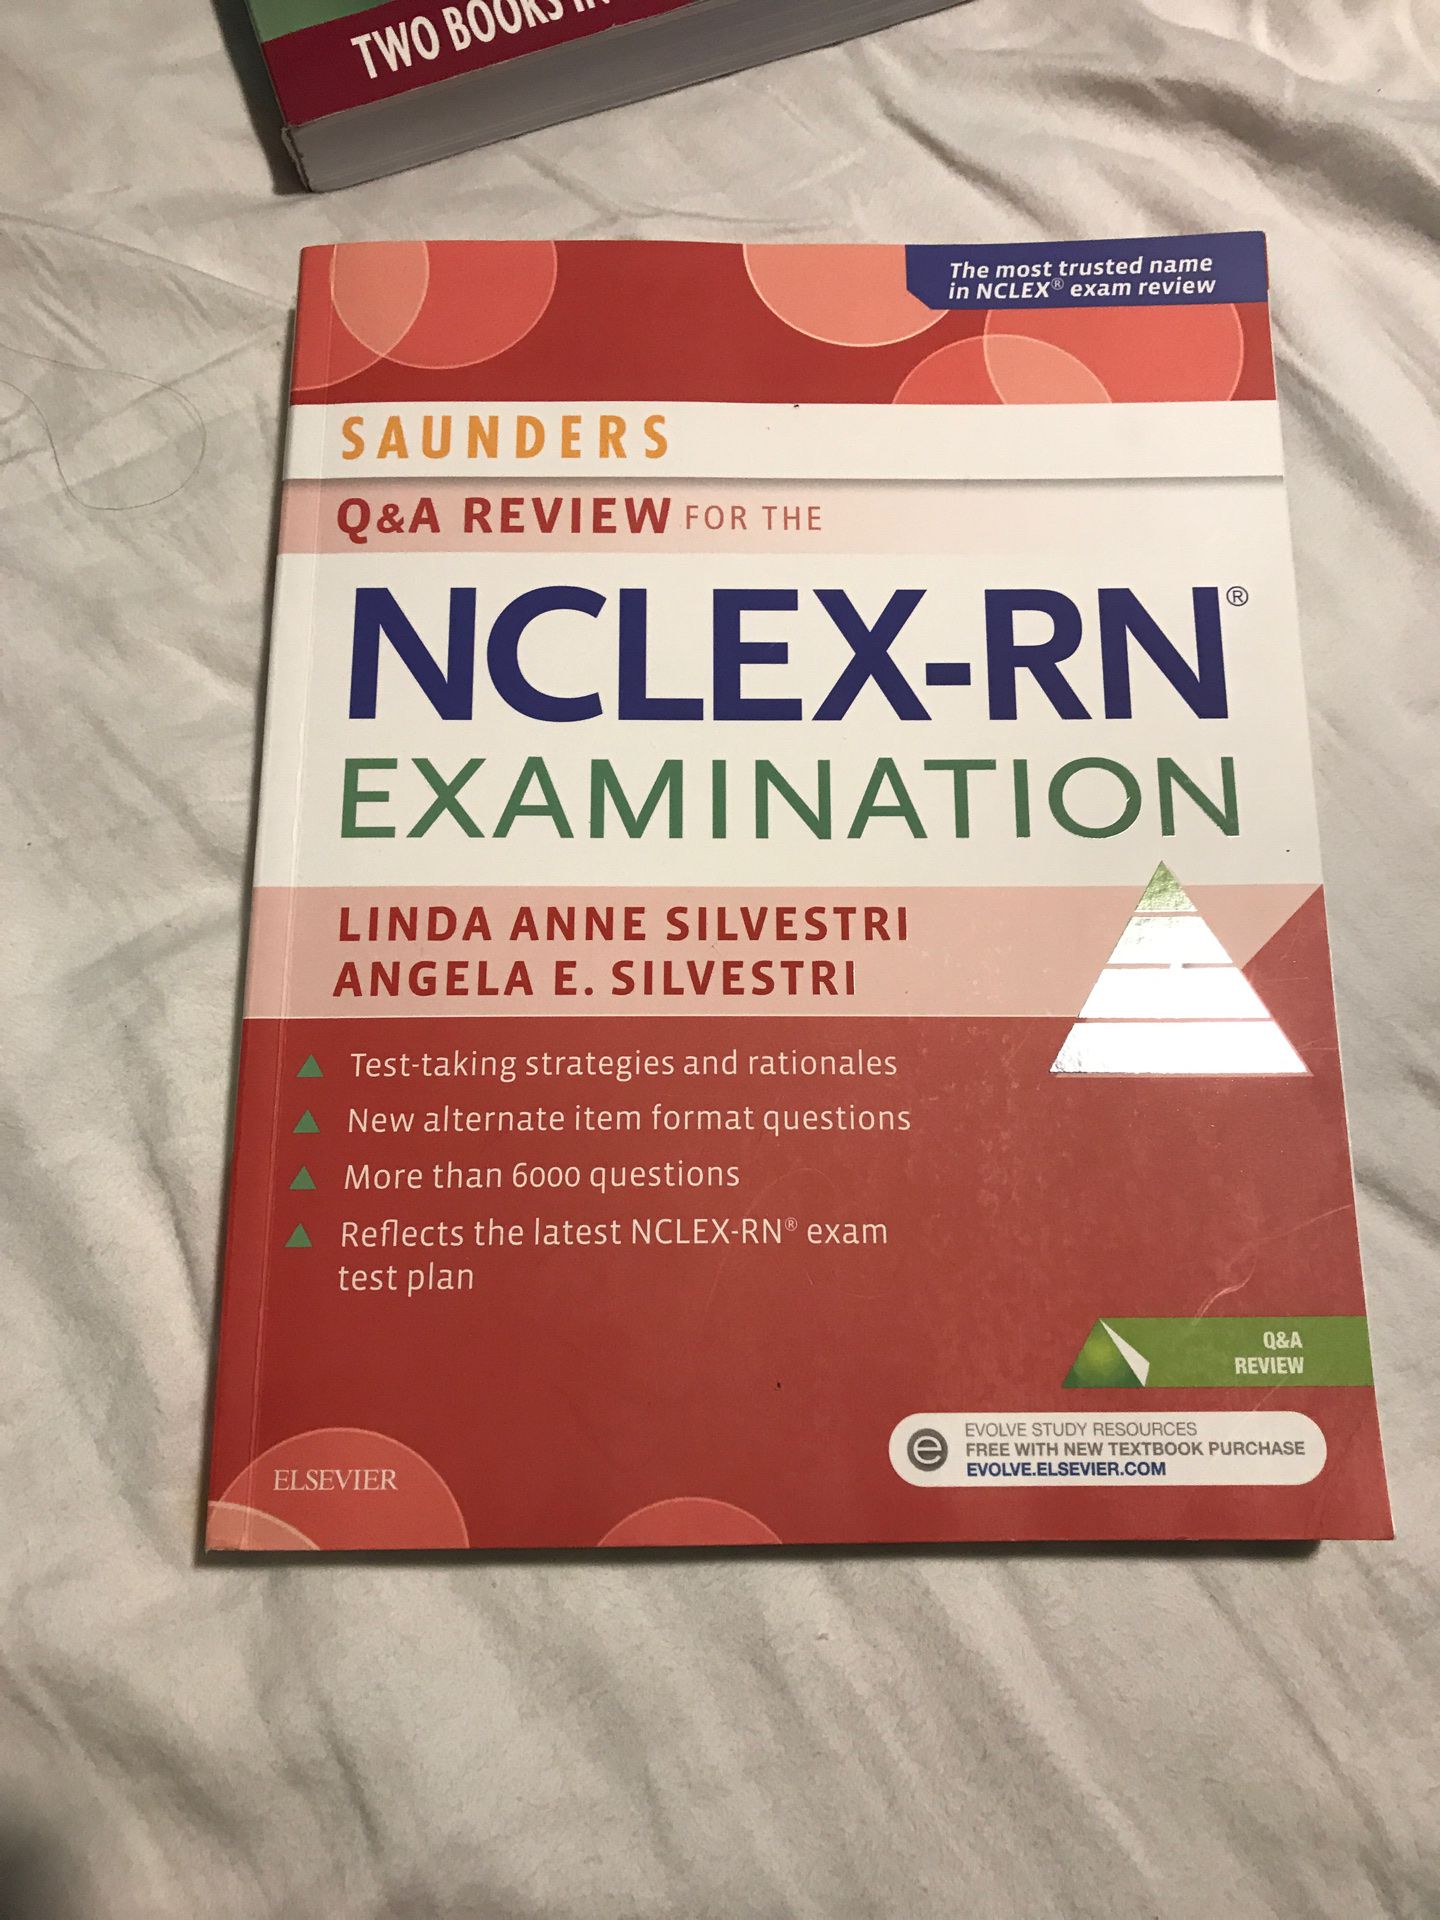 Nclex-rn examination